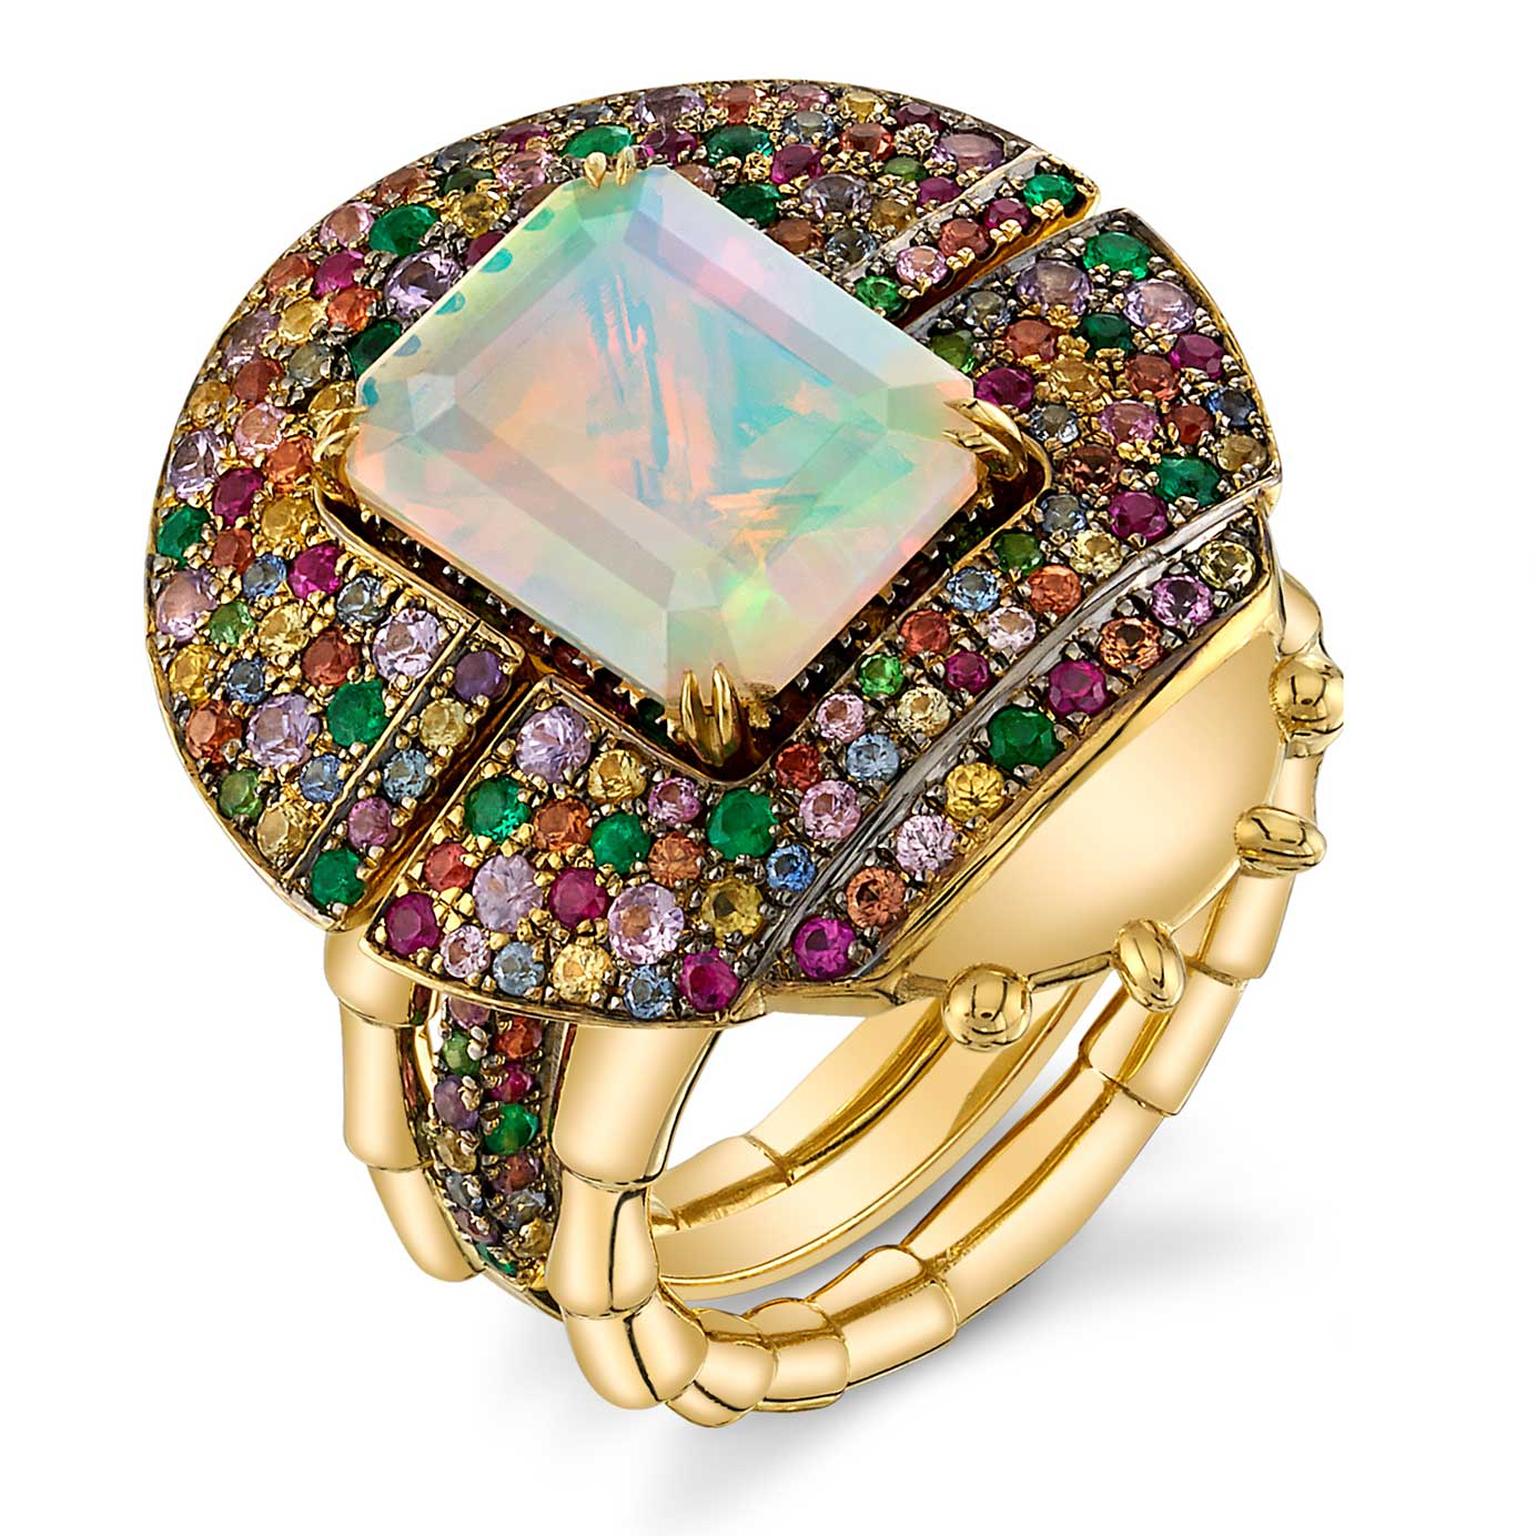 Daniela Villegas adaptable ring with opal